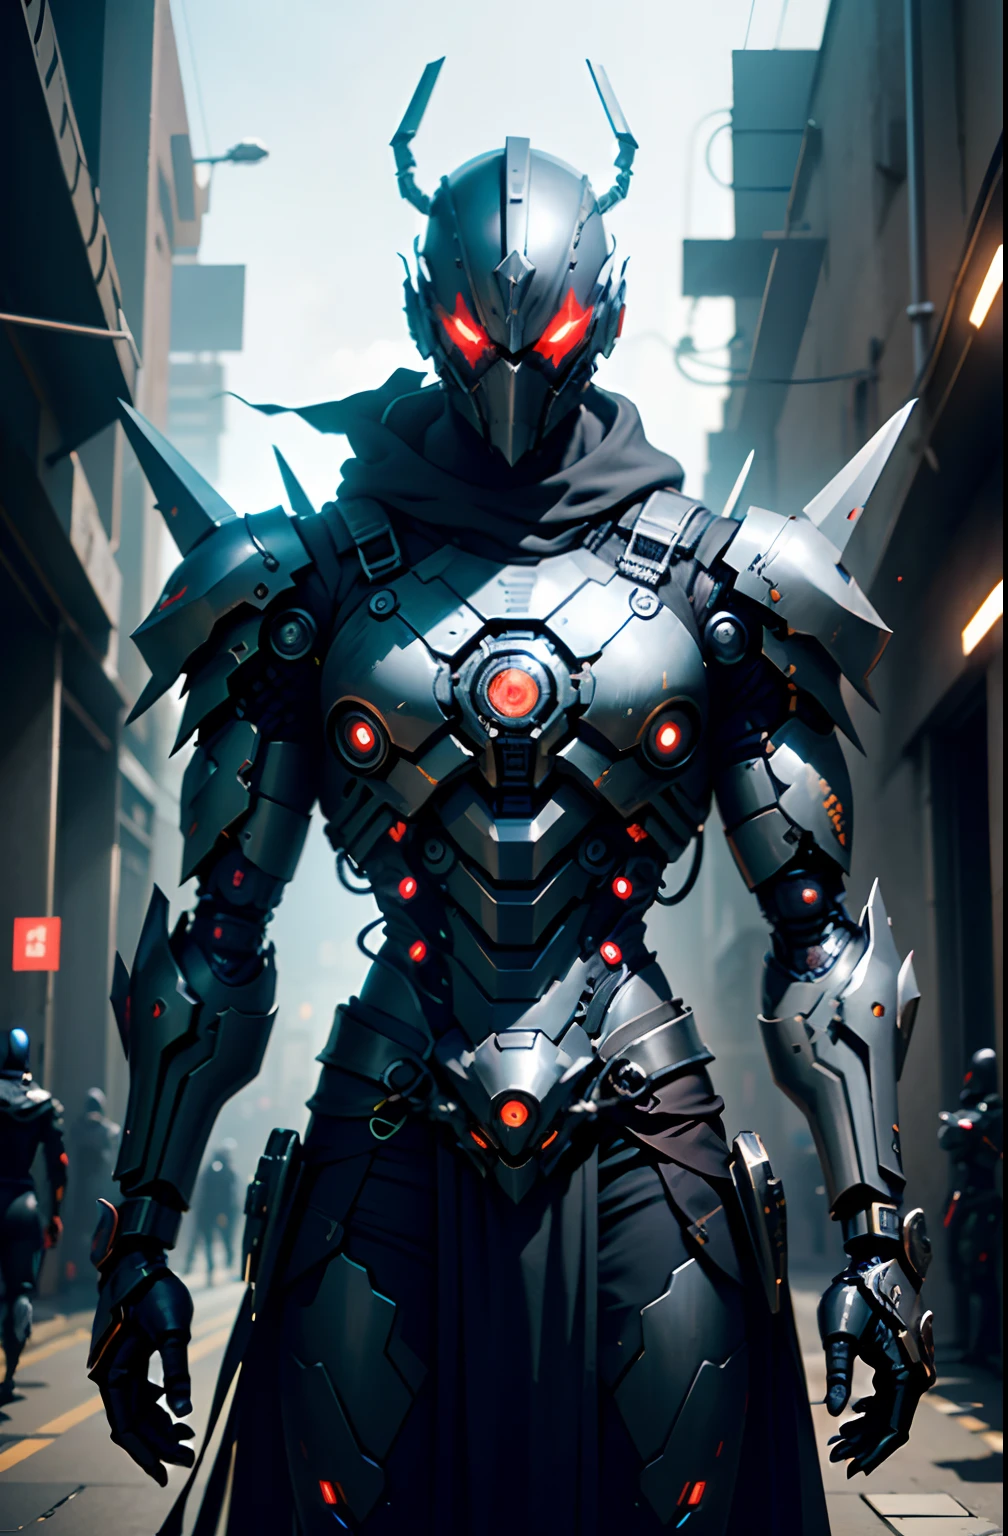 Dark_Fantasy、Wearing a metal mask、cyberpunked、(Double Sword、Scorpion Cyborg Man、Das Veilchen:1.1)、1man、Mechanical technology、Robot Presence、Ninja-like fighting stance、Cybernetic Guardian、